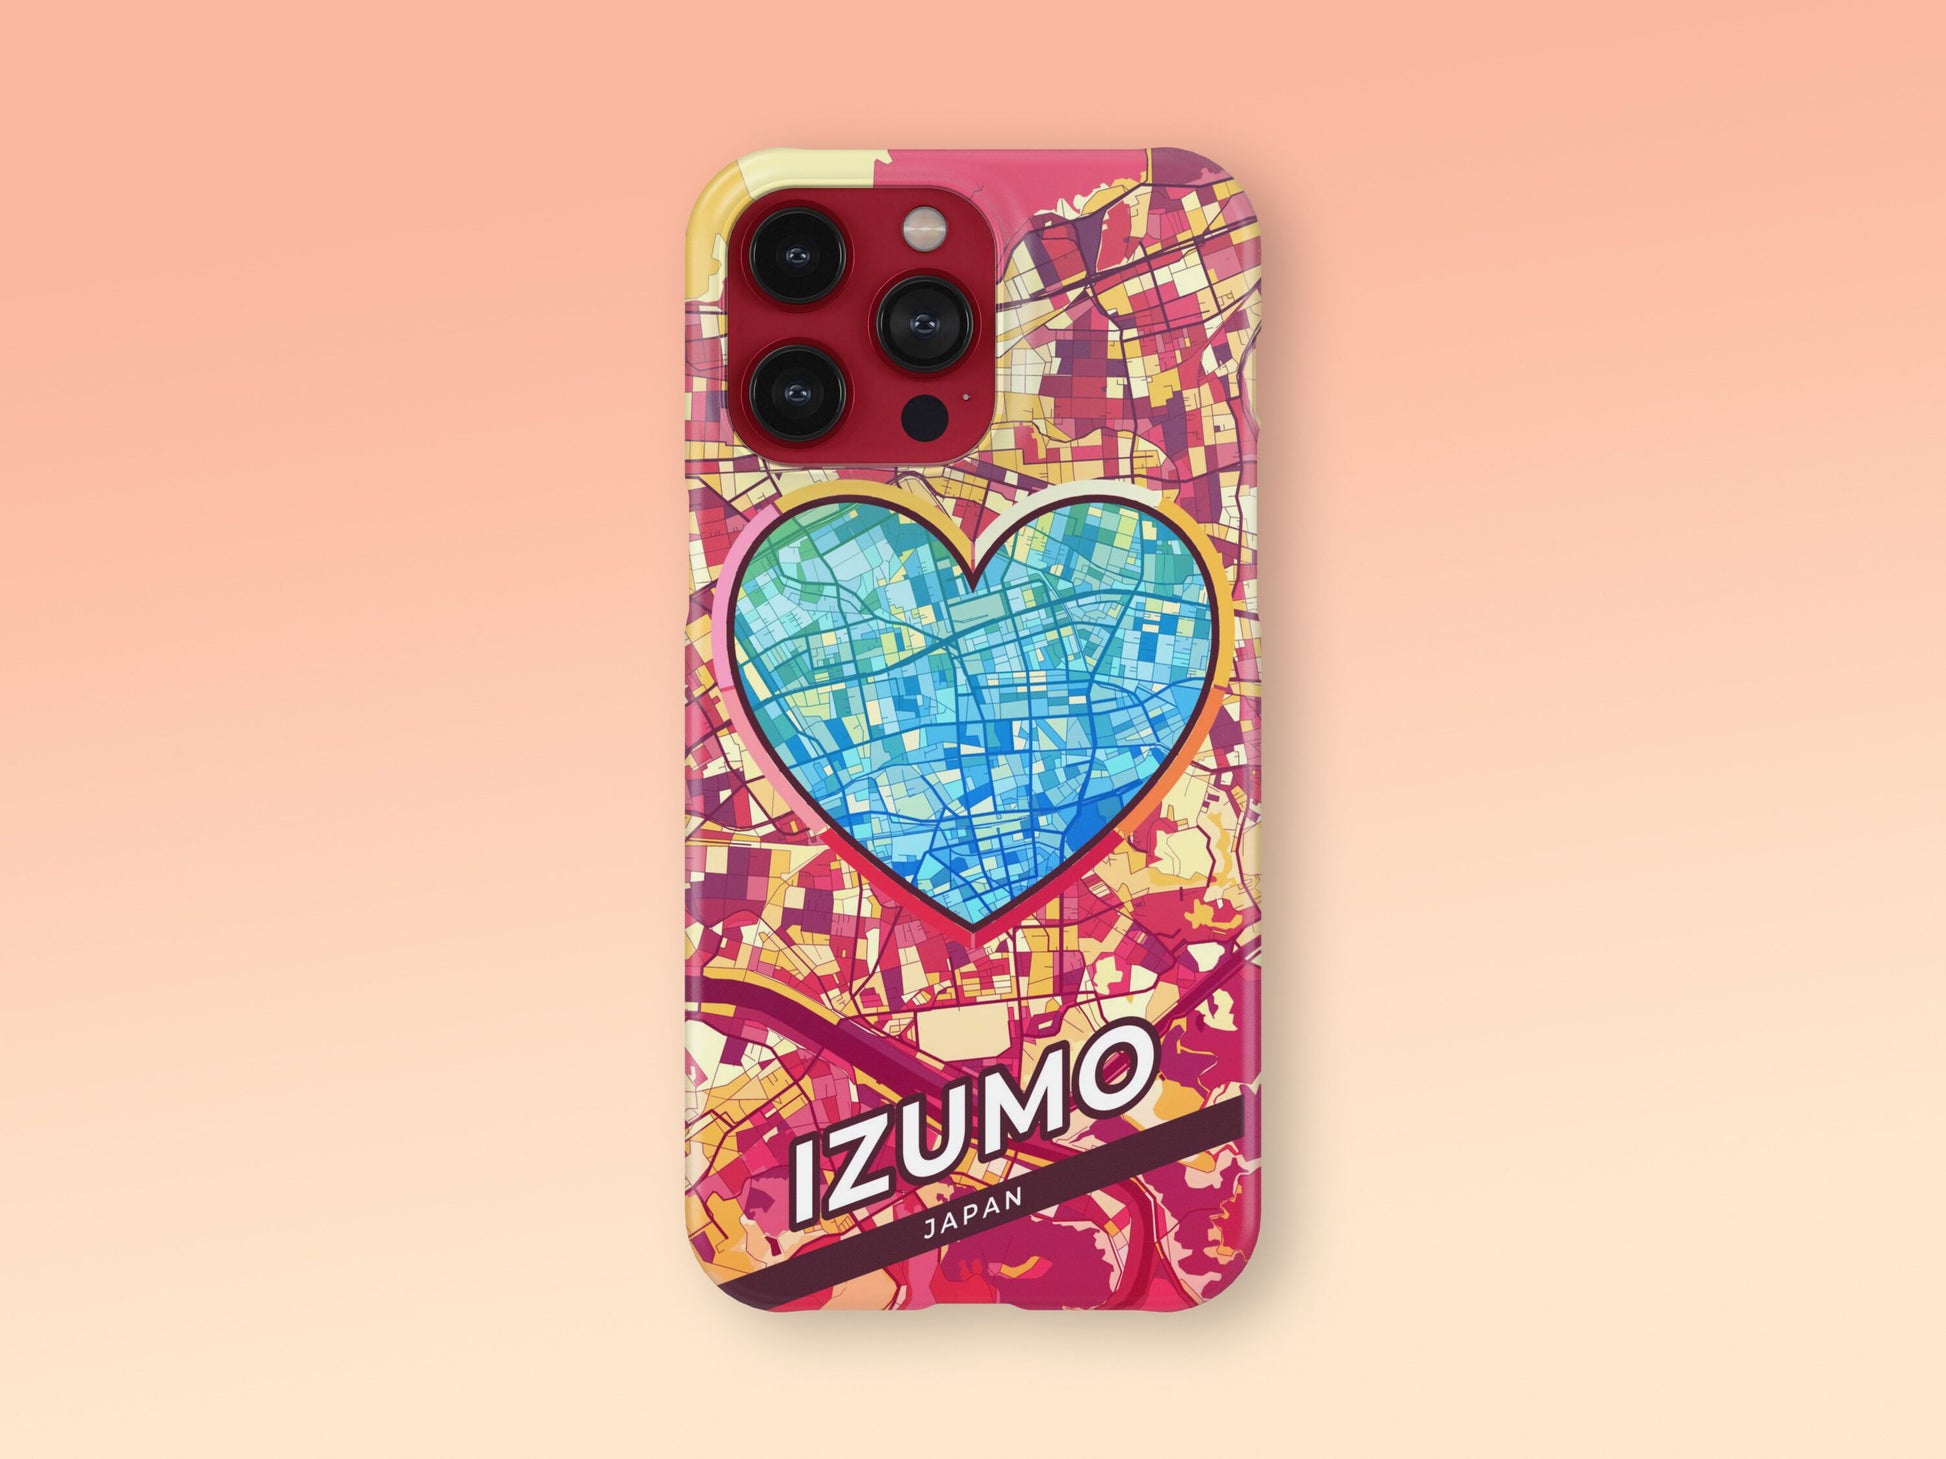 Izumo Japan slim phone case with colorful icon. Birthday, wedding or housewarming gift. Couple match cases. 2